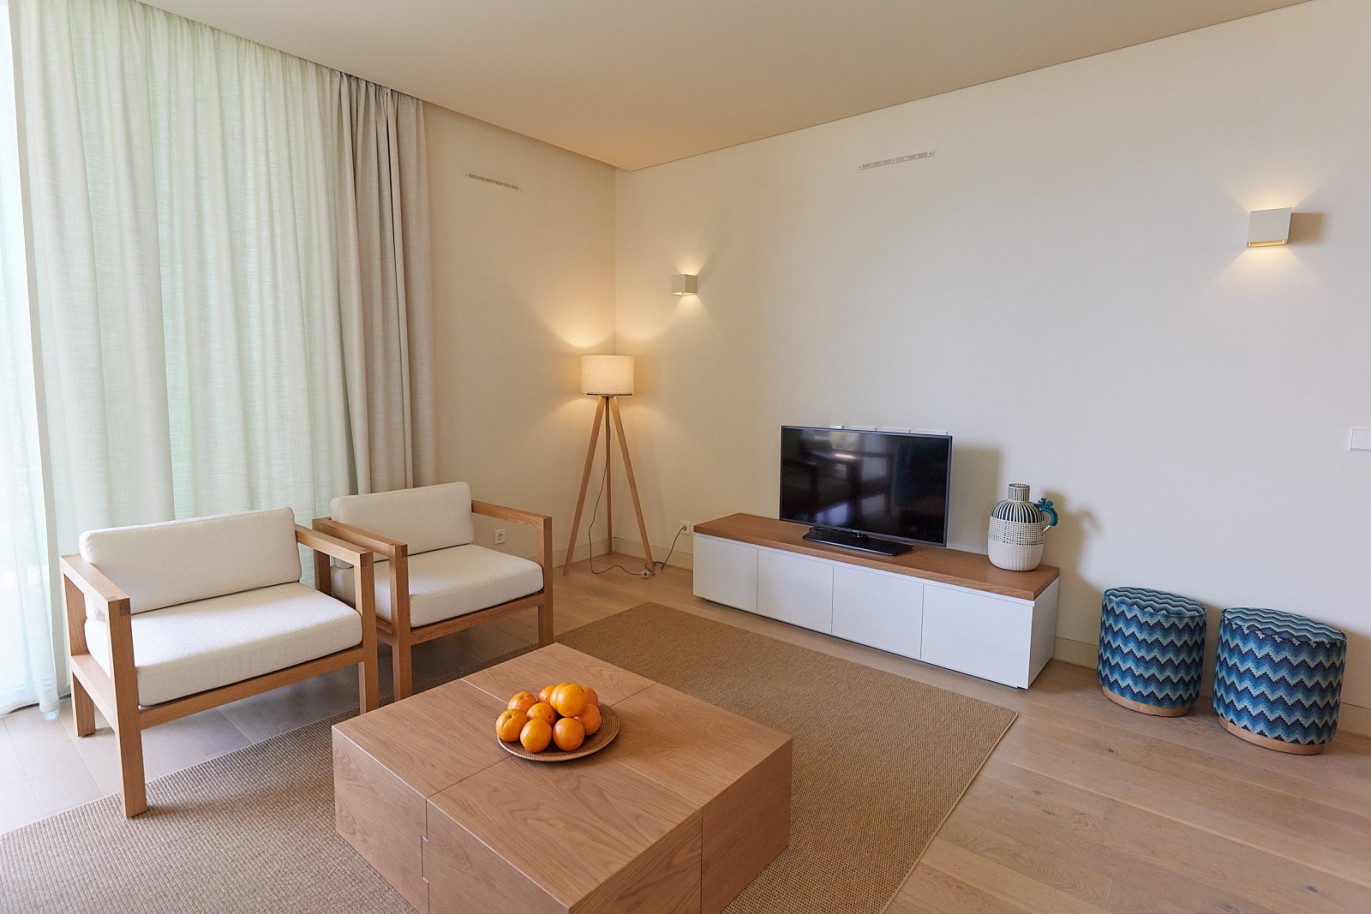 2 bedroom apartment in resort, for sale in Porches, Algarve_229085